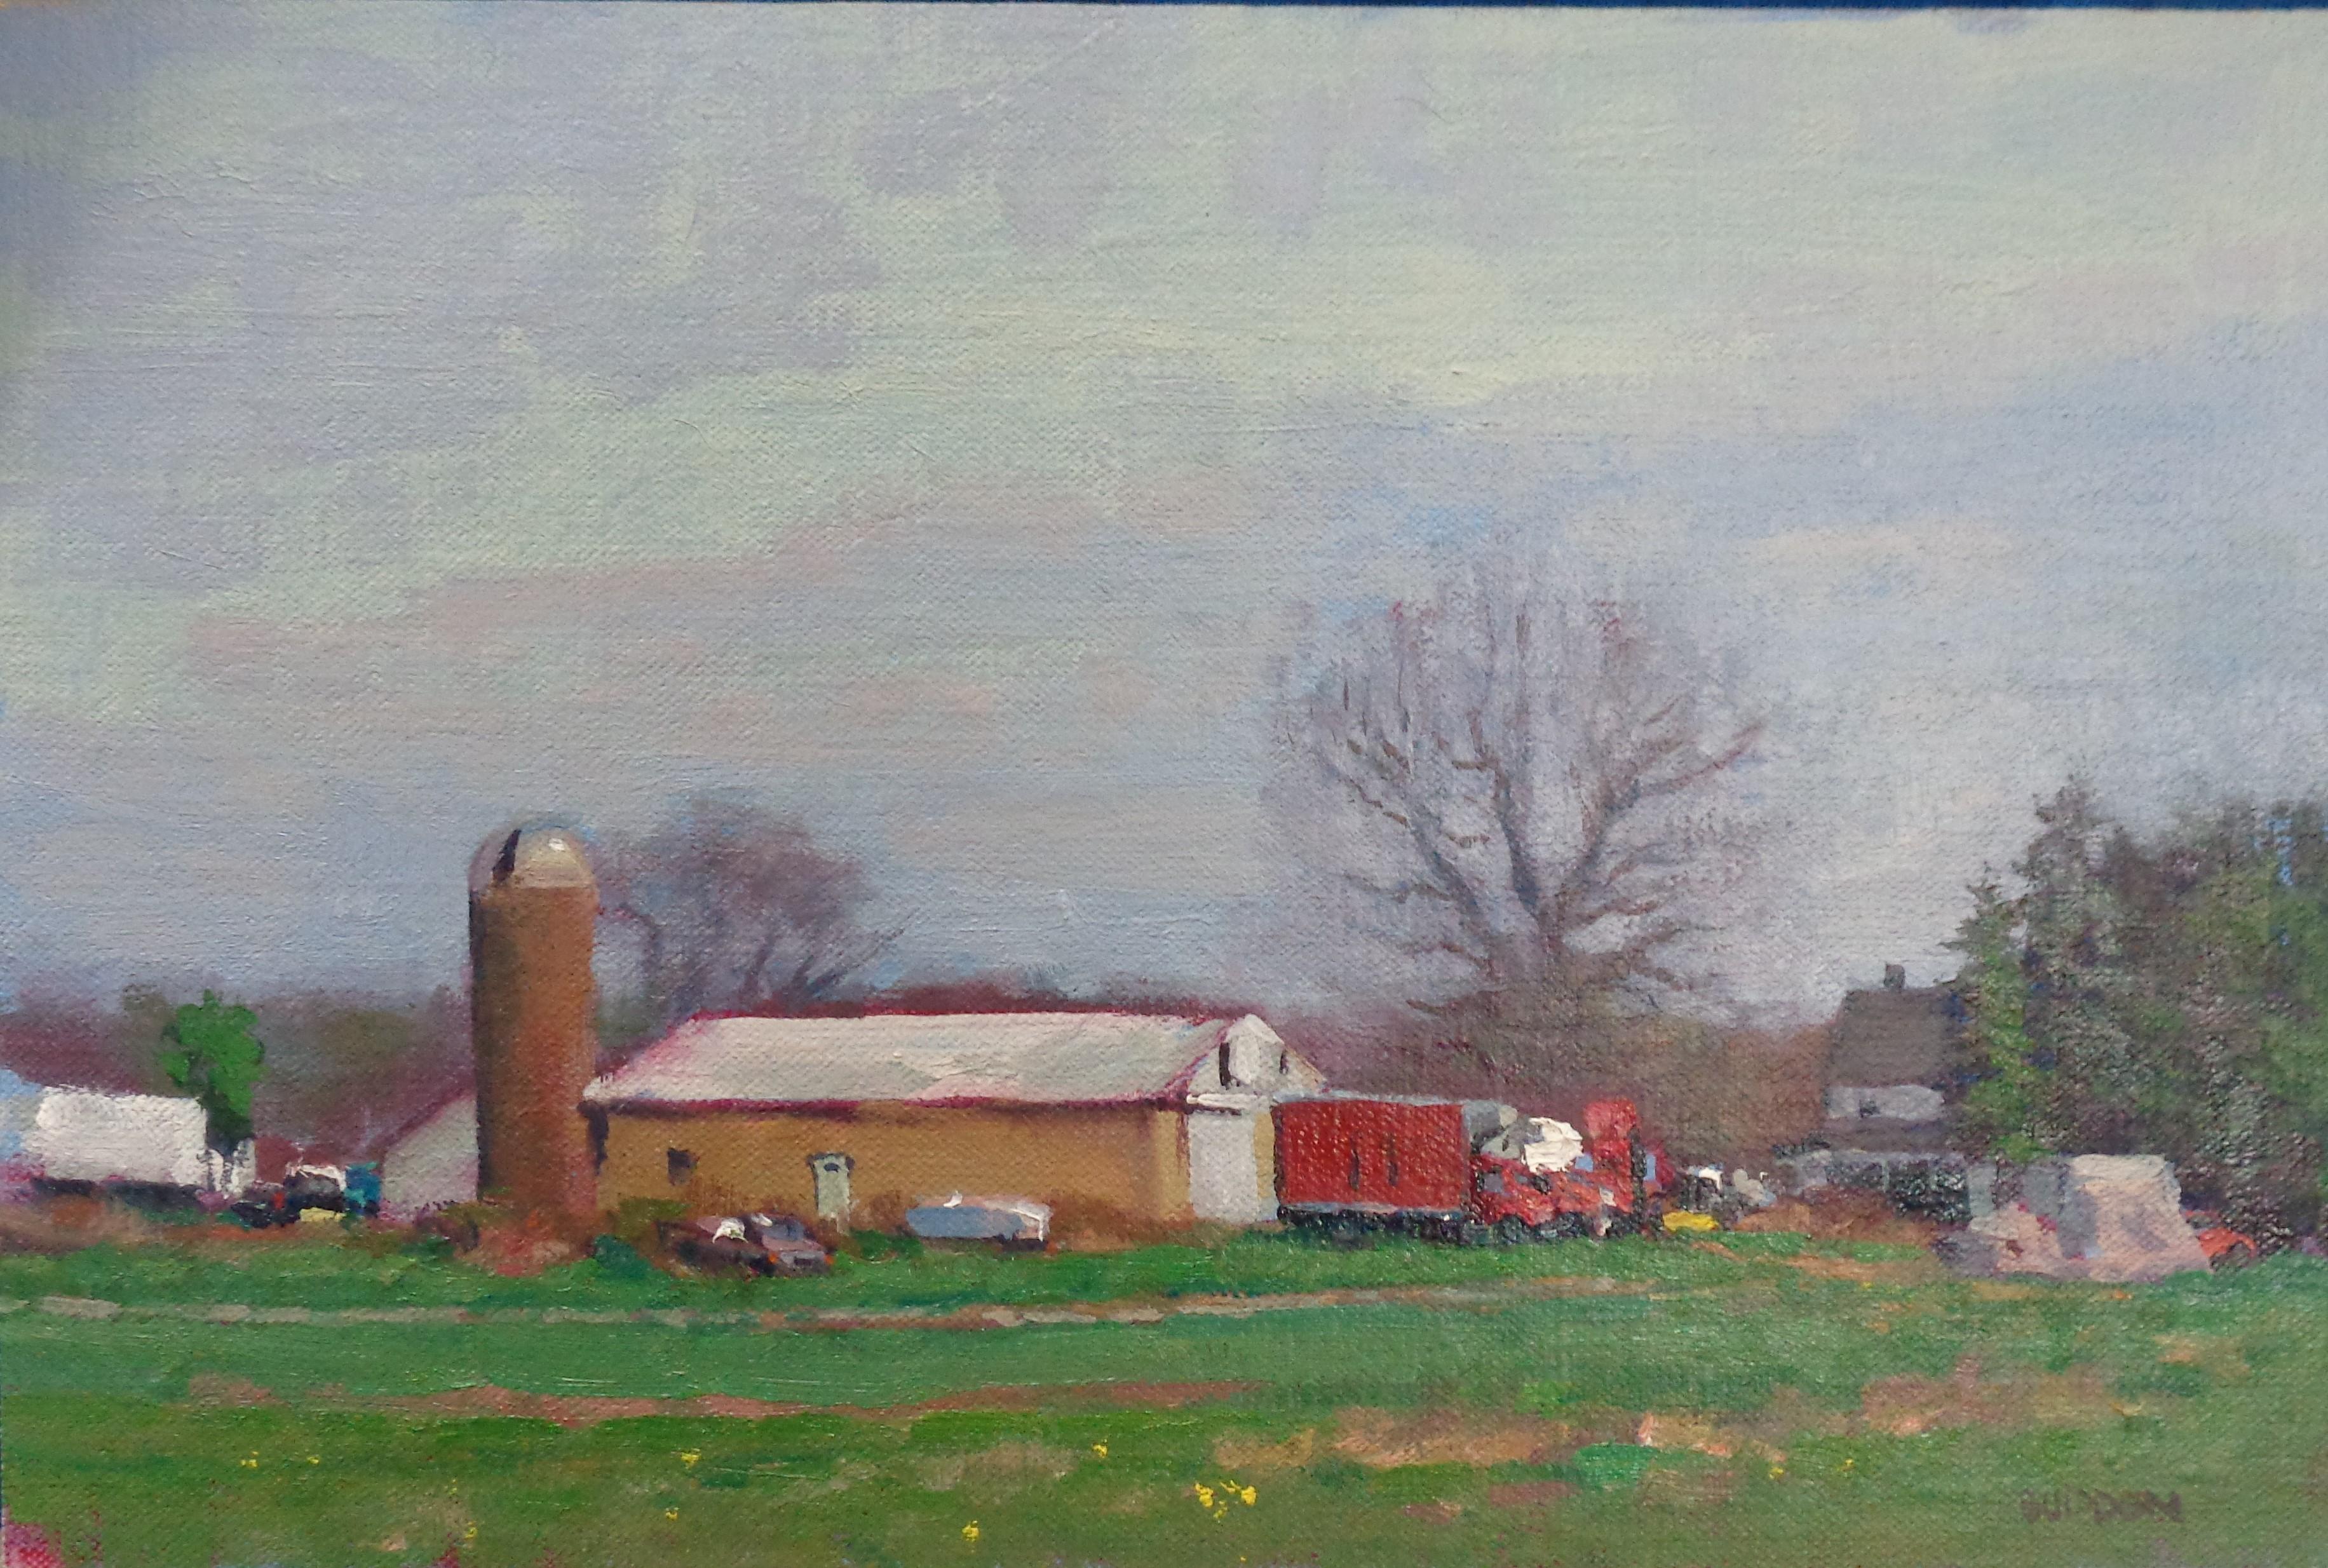  Impressionistic Rural Farm Landscape Painting Michael Budden  For Sale 1